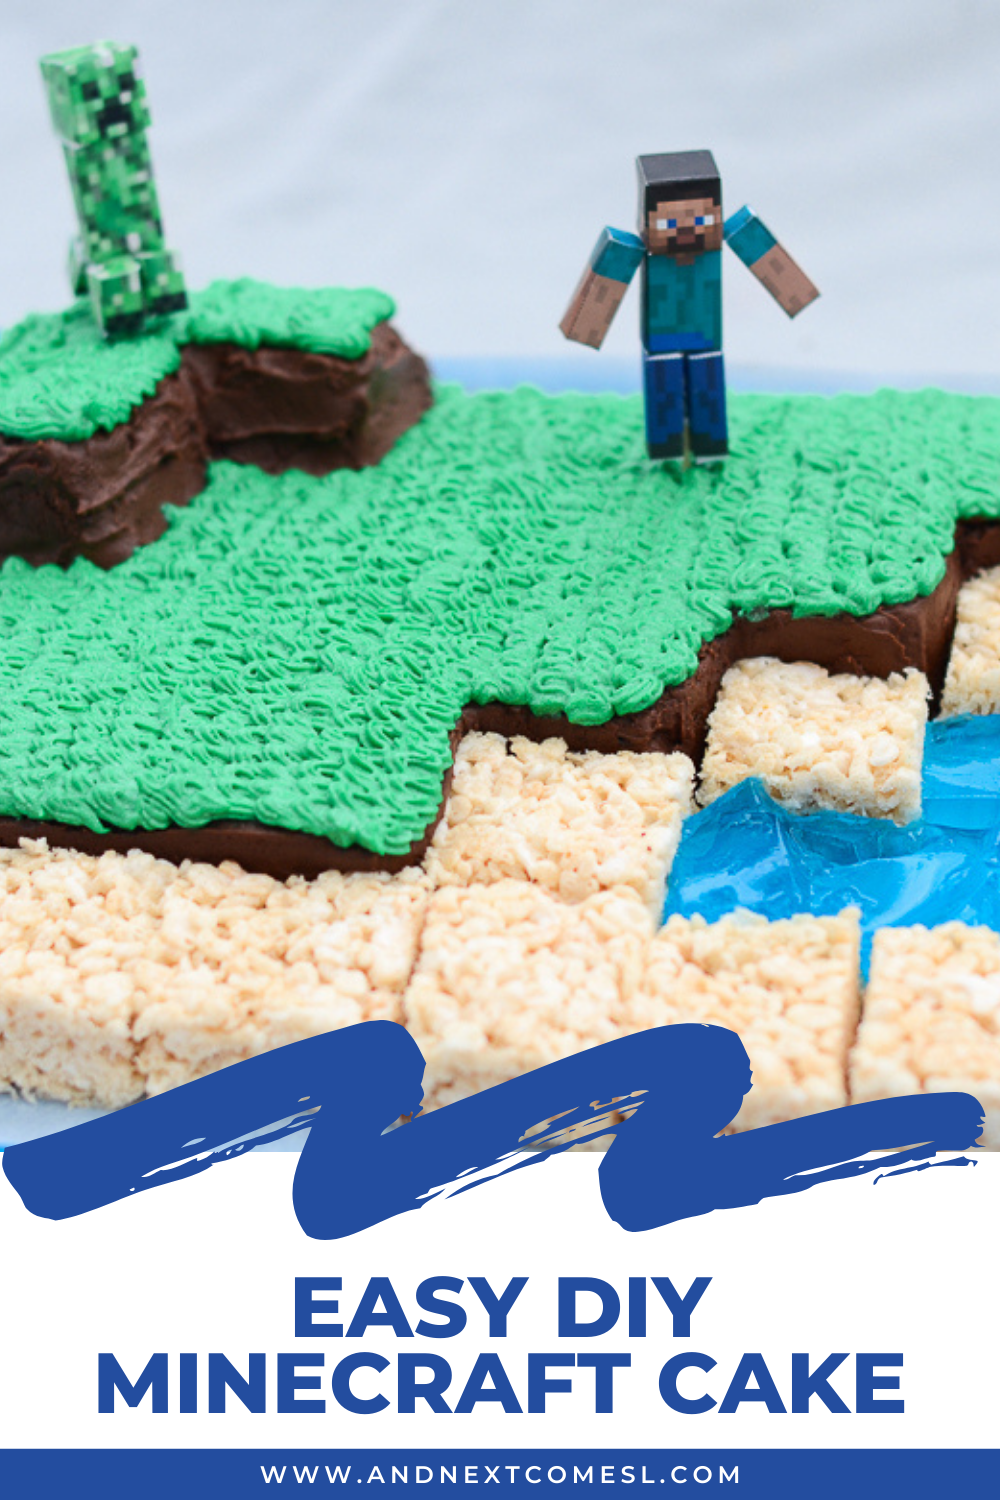 Easy DIY Minecraft cake tutorial: How to make a Minecraft birthday cake